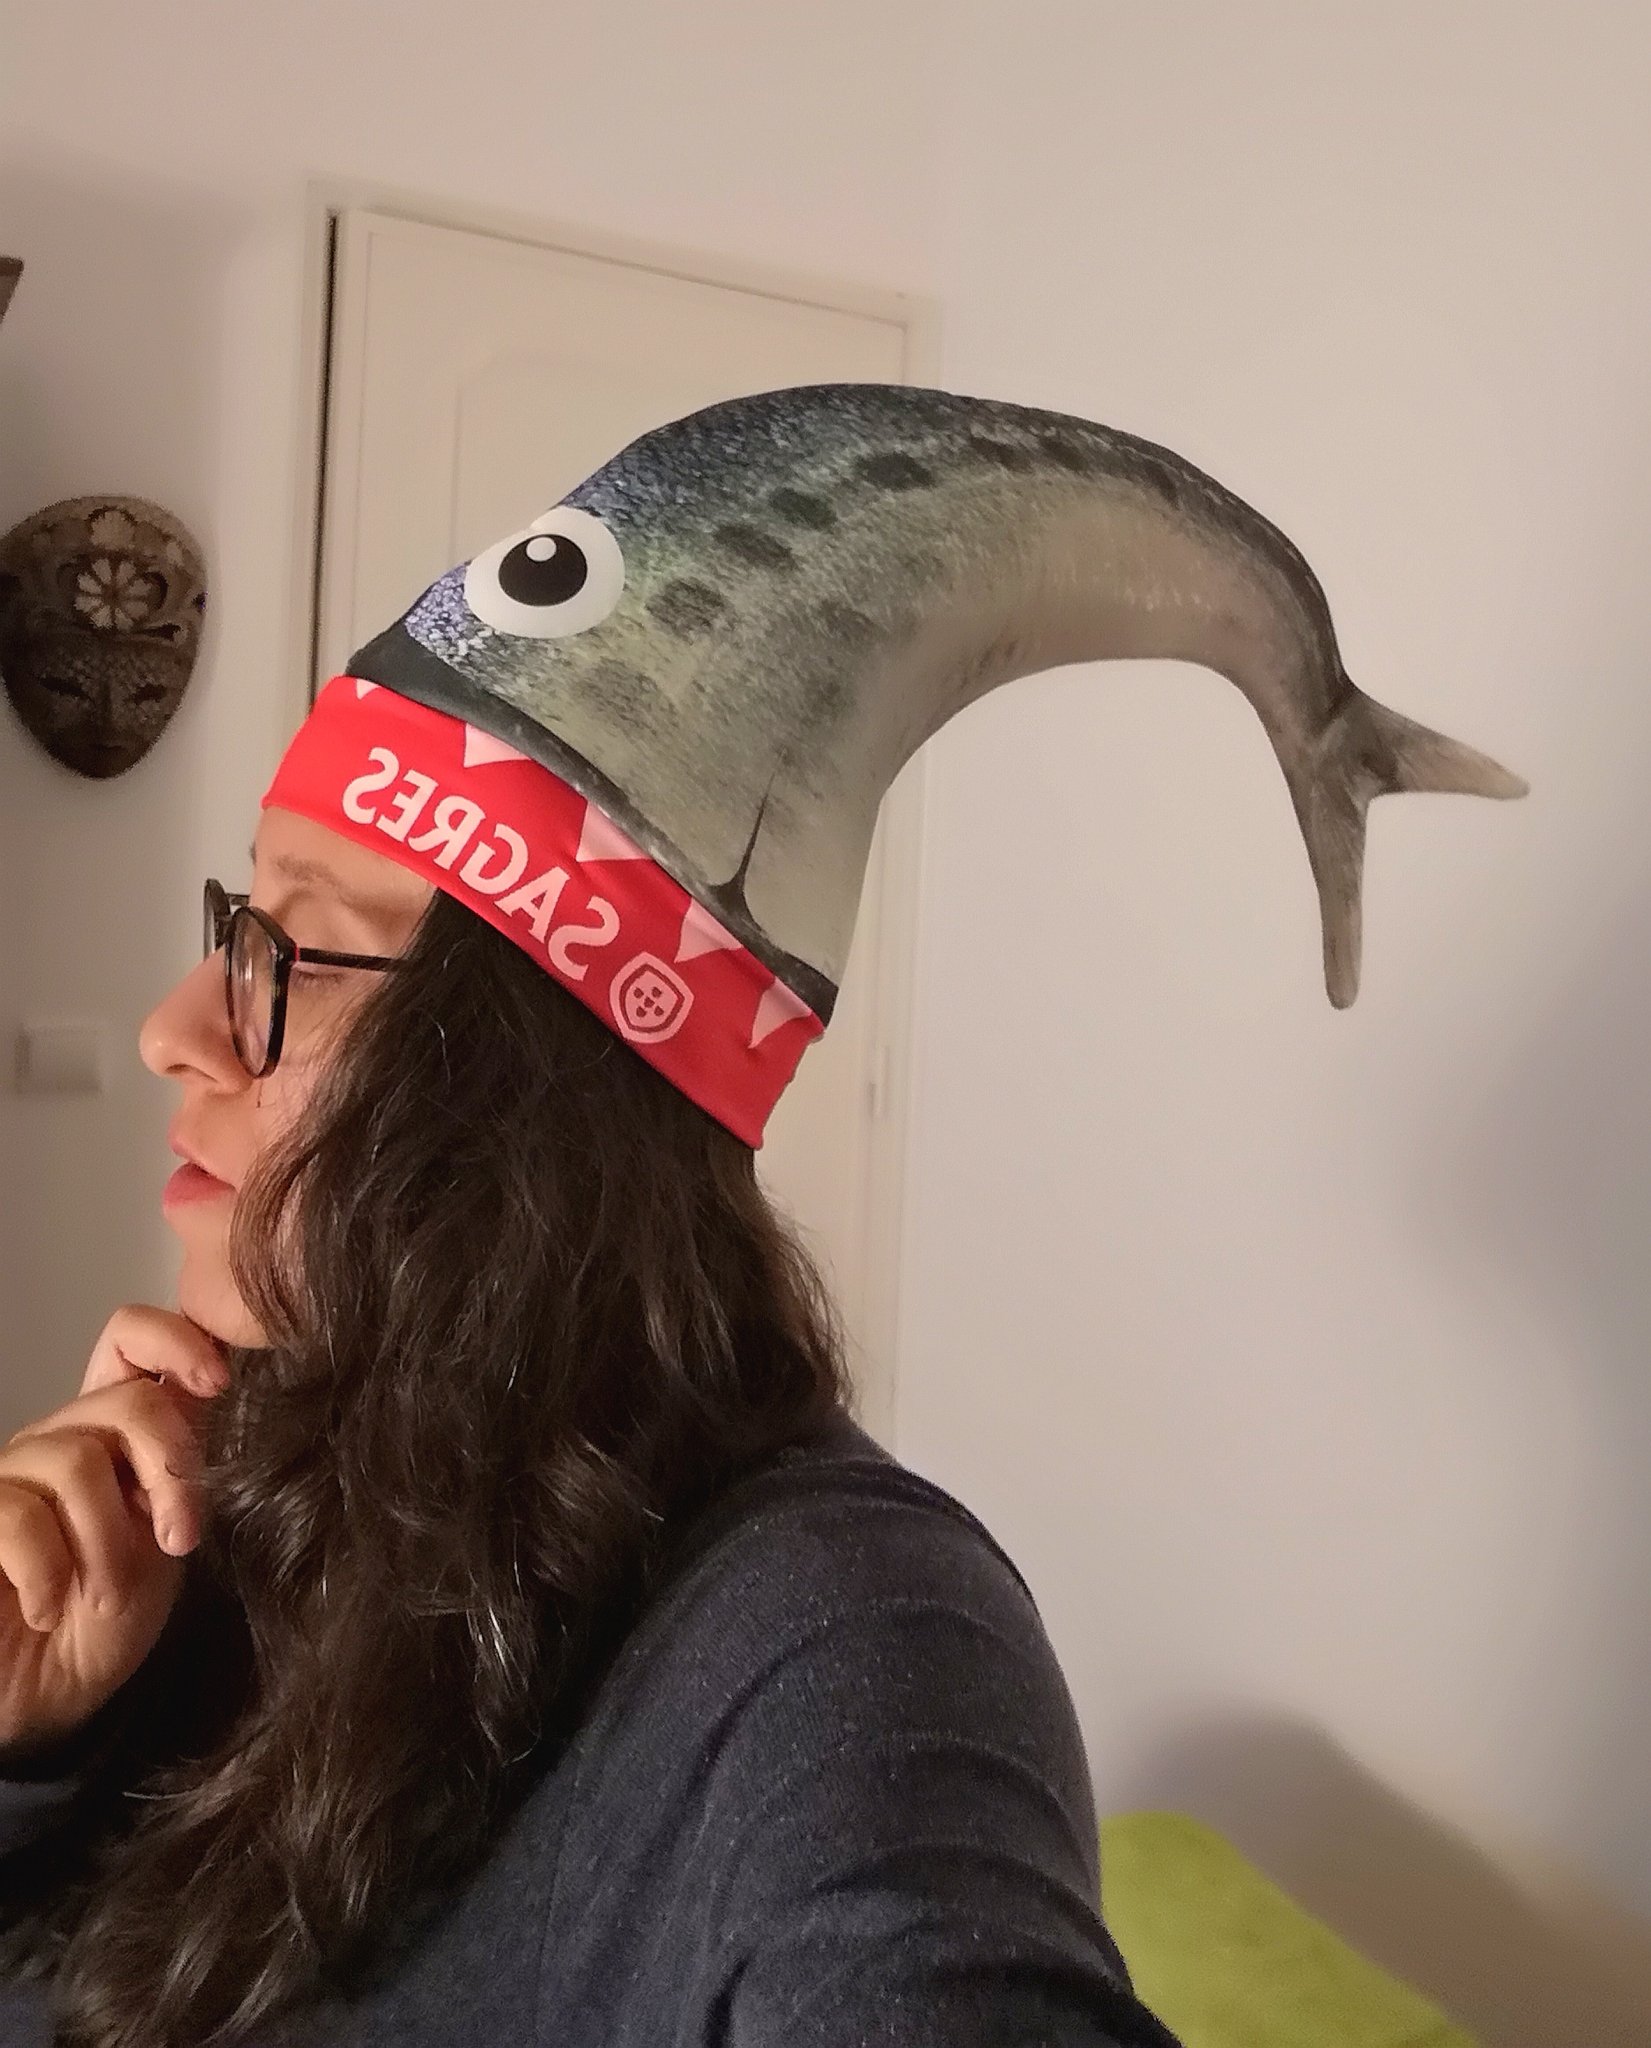 Cindy deRosier: My Creative Life: Ocean Week: Fish Hat and Sign